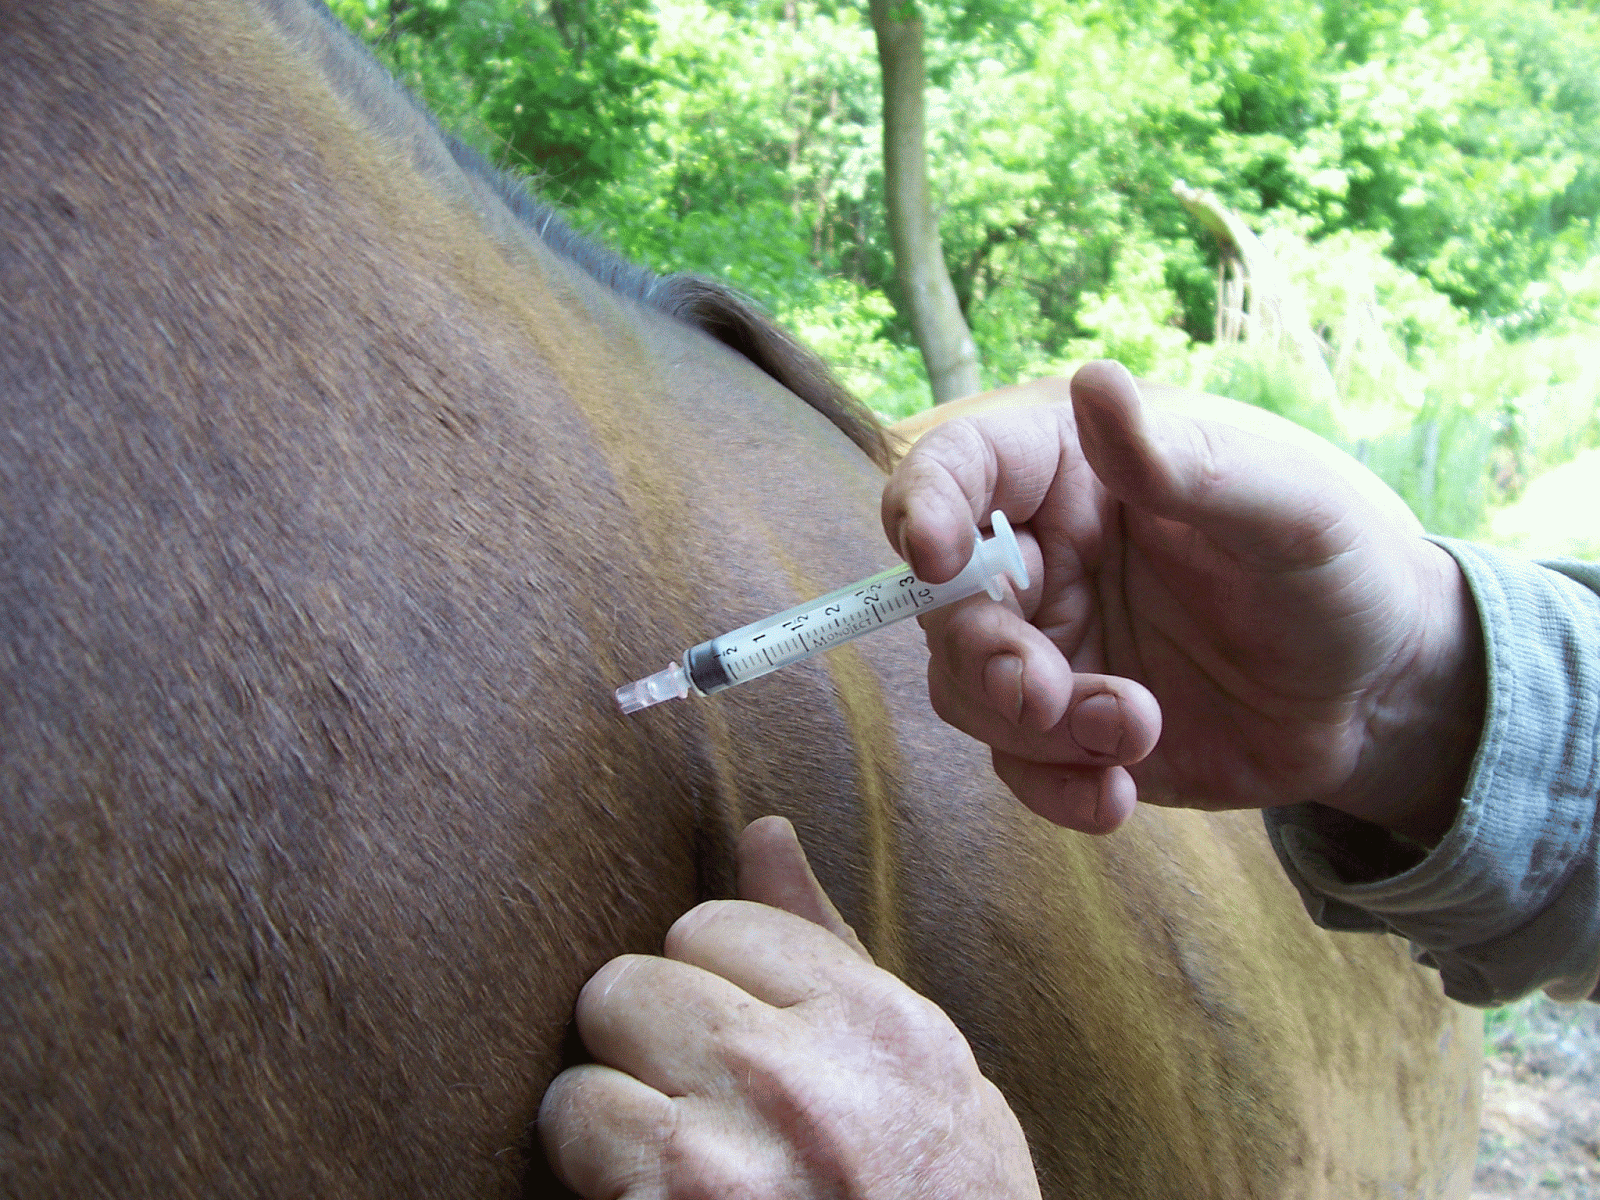 Укол ягненку. Лептоспироз лошадей вакцина. Вакцинация лошадей.